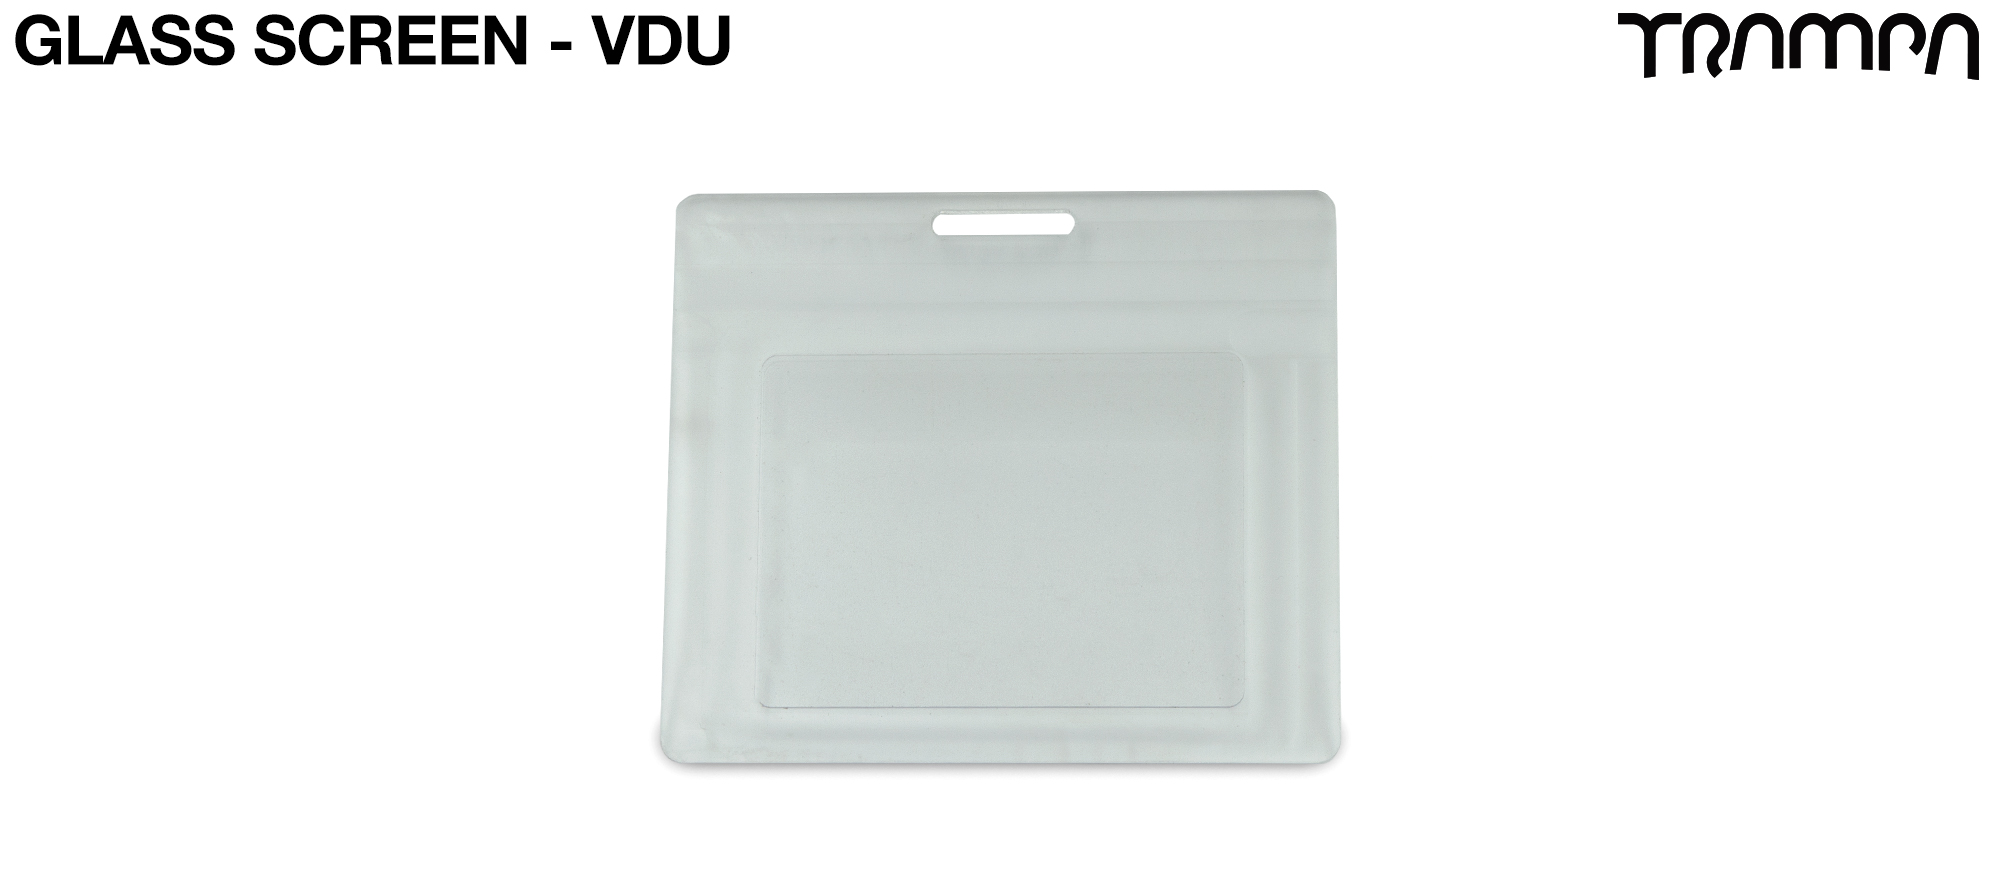 VESC DISPLAY UNIT - Glass Screen 